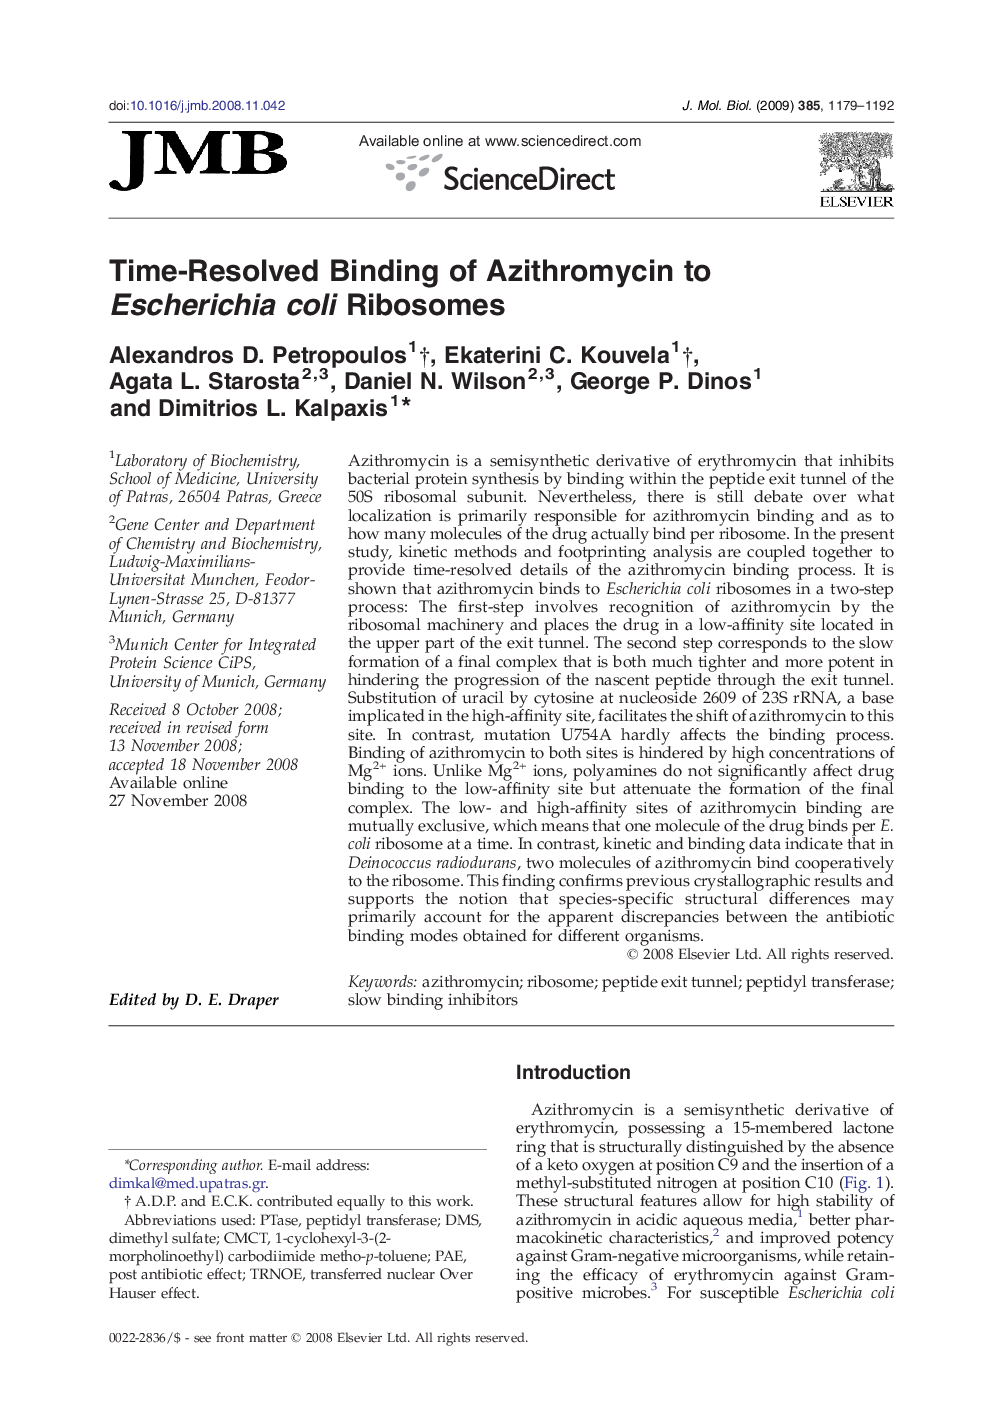 Time-Resolved Binding of Azithromycin to Escherichia coli Ribosomes